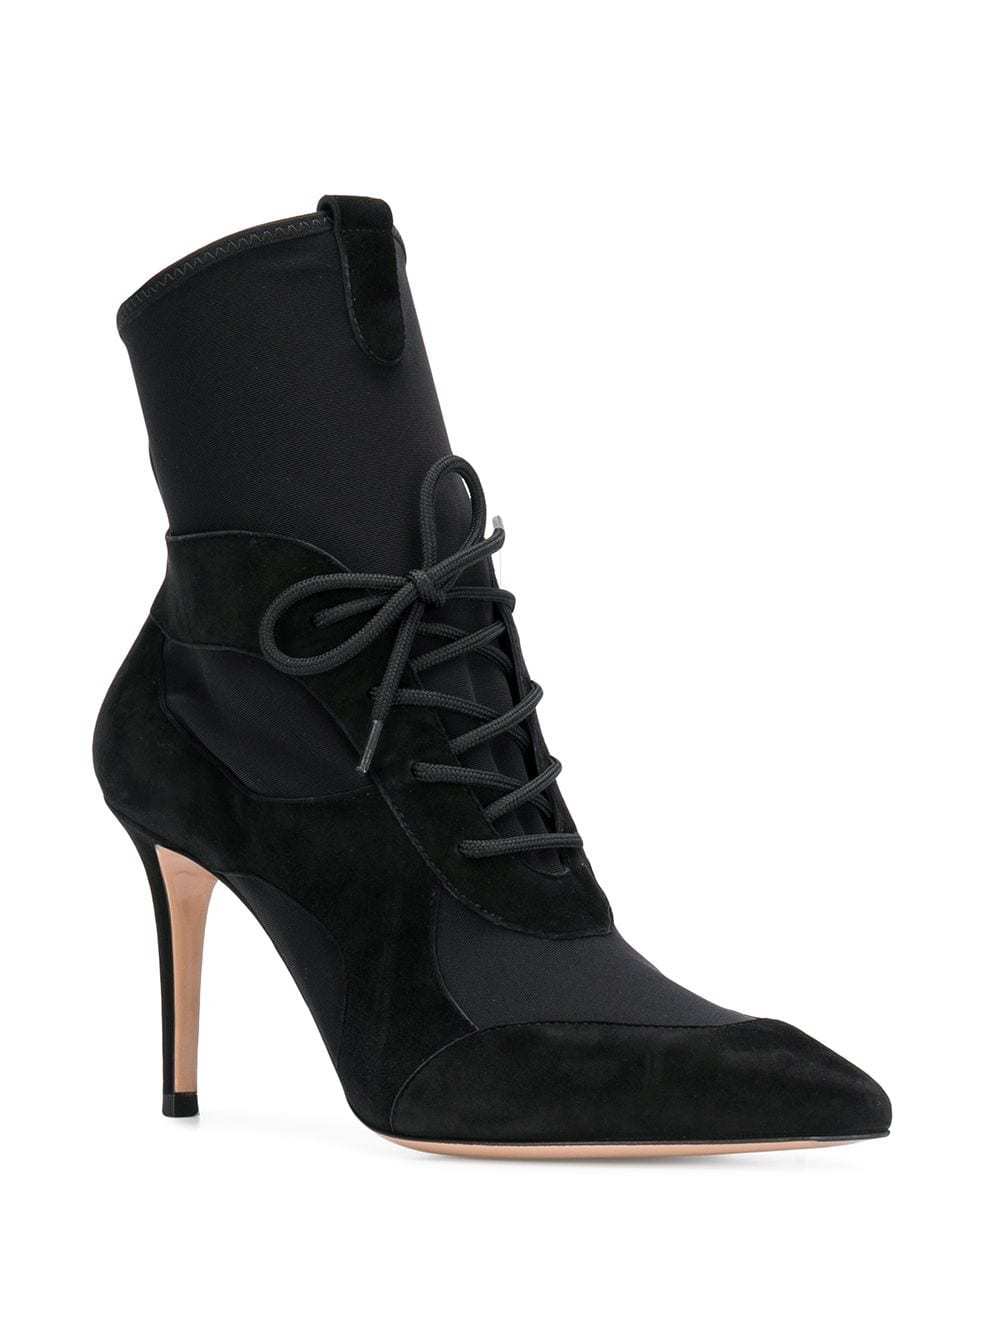 black lace up stiletto ankle boots